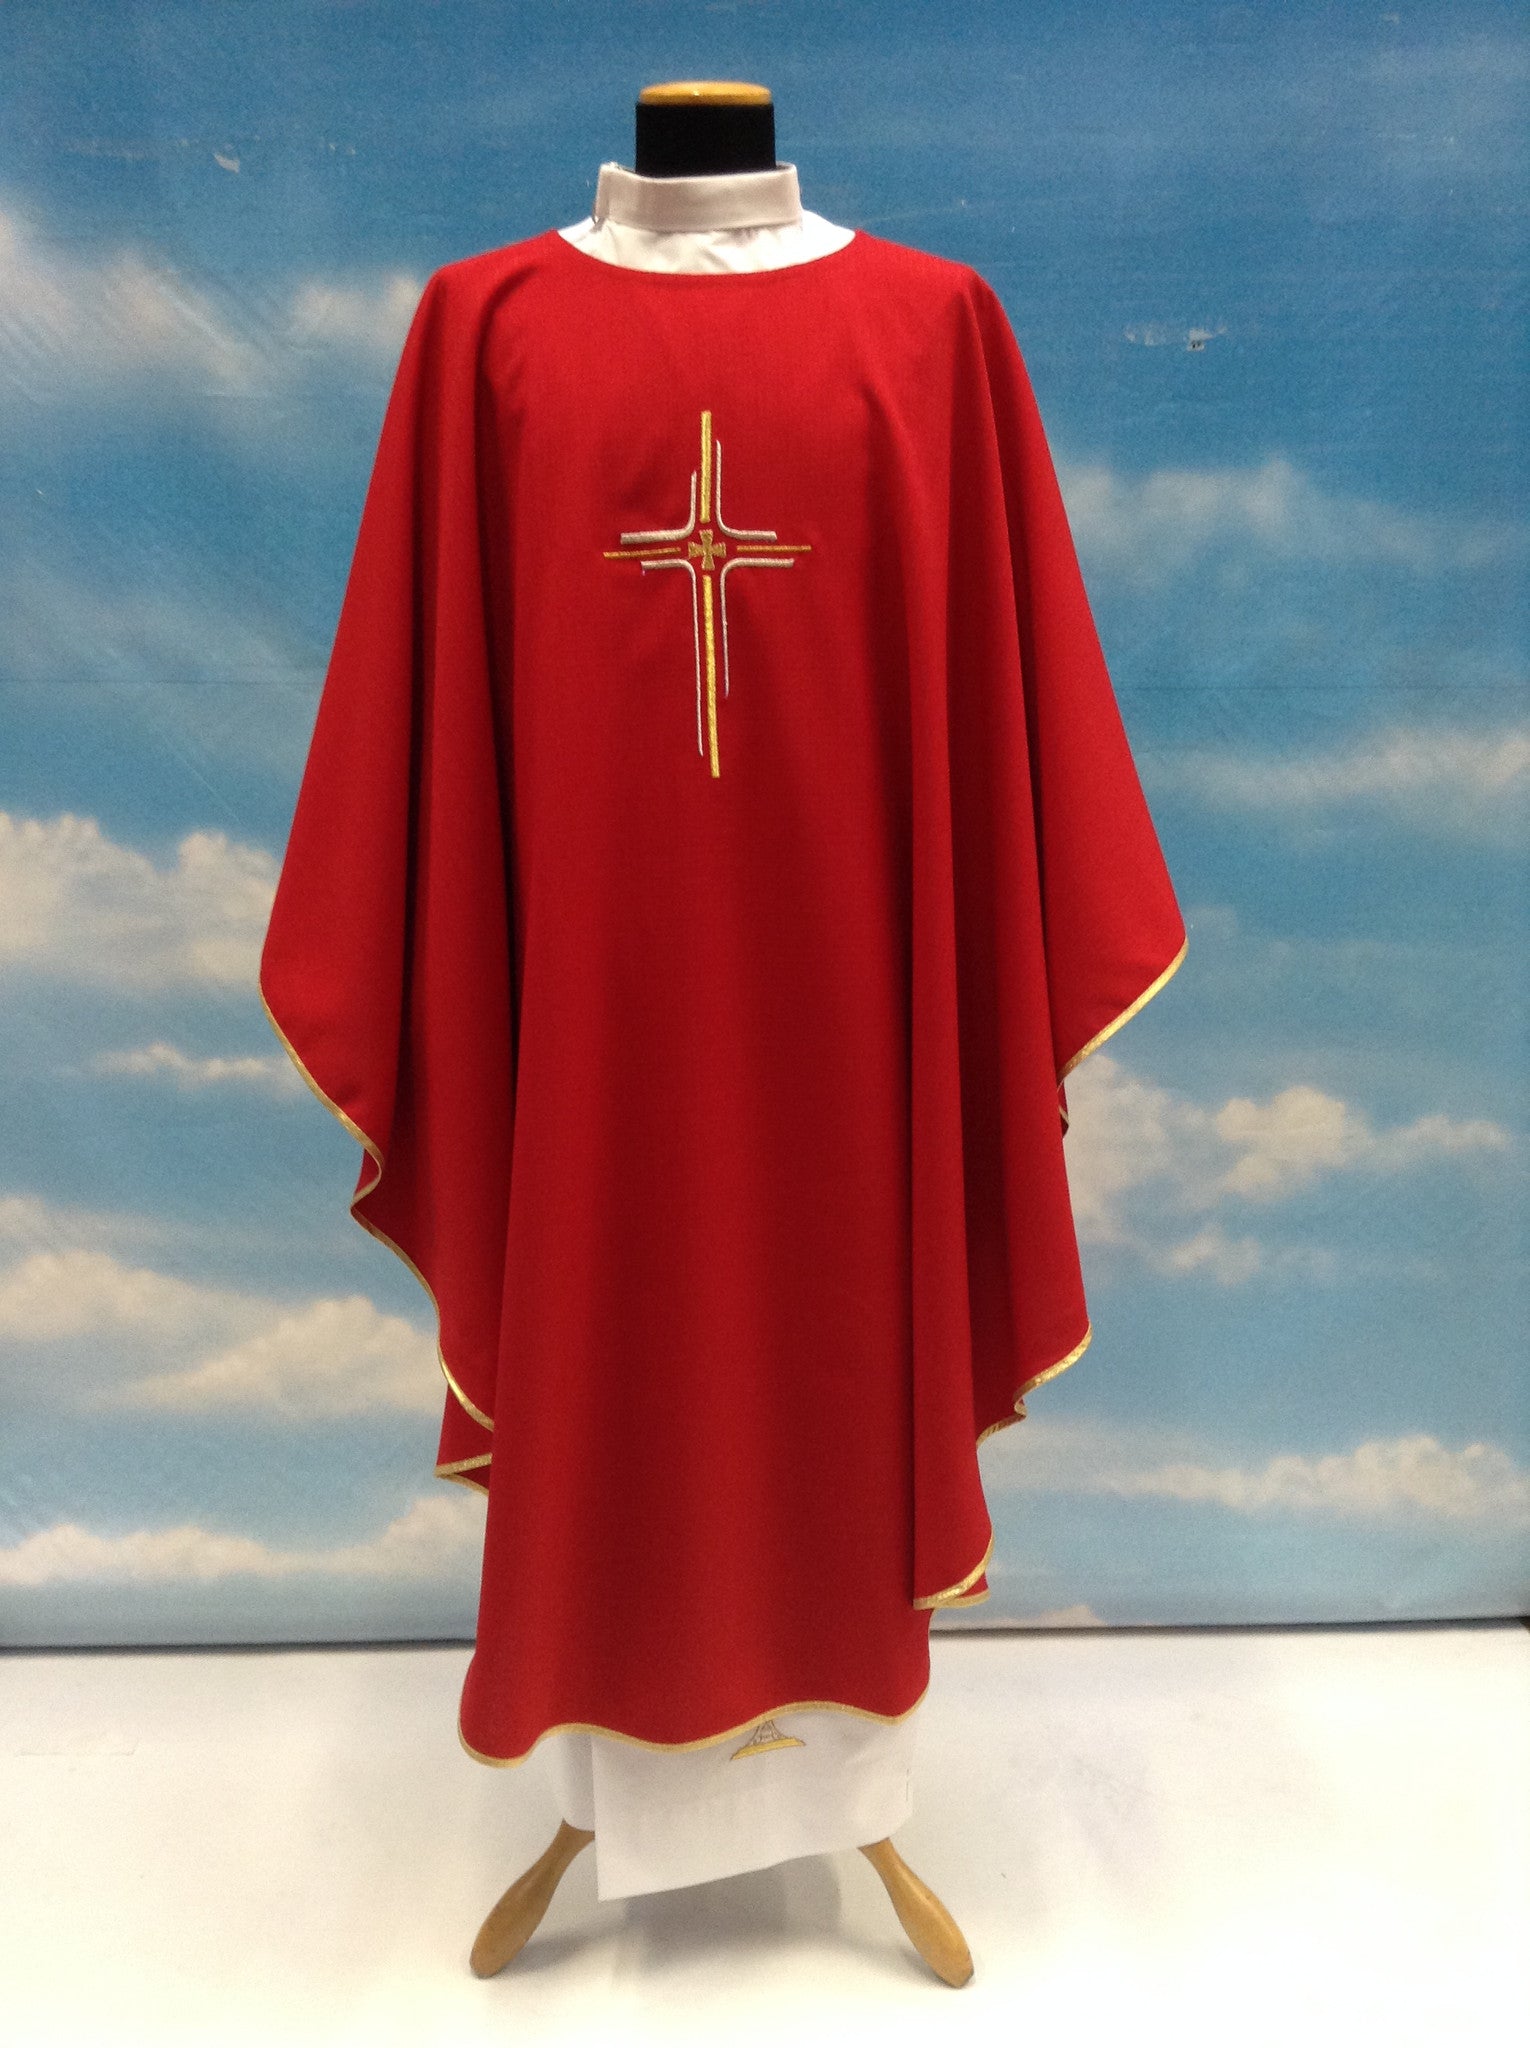 Chasuble - Micro Monastico Fabric - Light Weight & Soft - Solivari - Chiarelli's Religious Goods & Church Supply